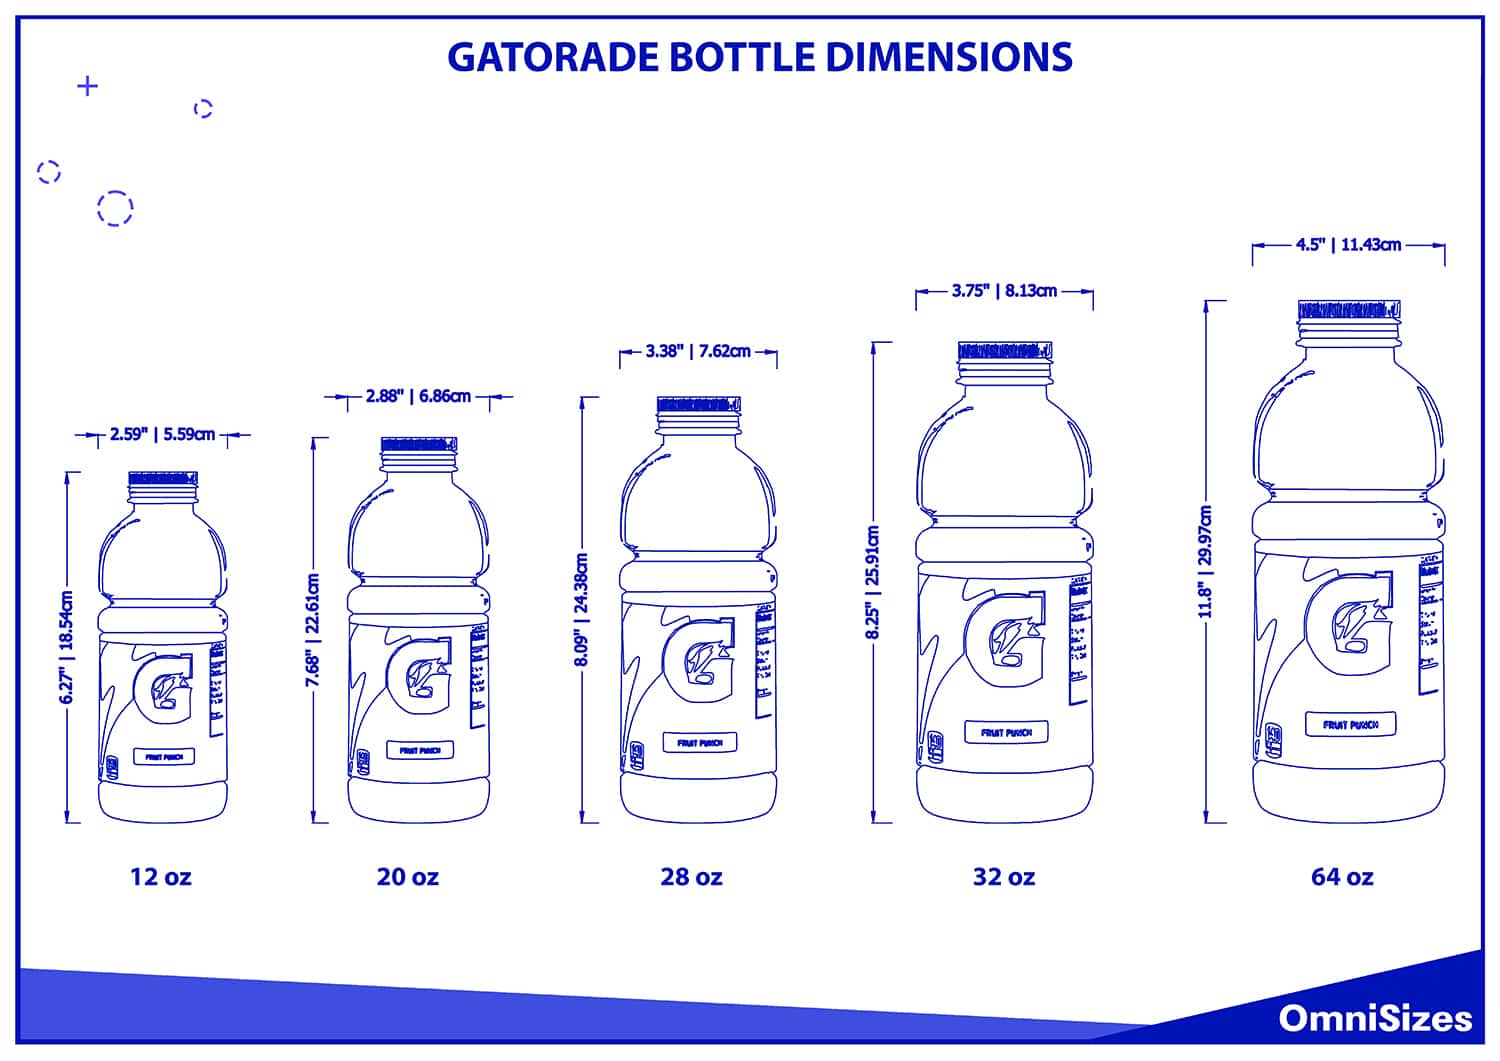 Gatorade bottle dimensions